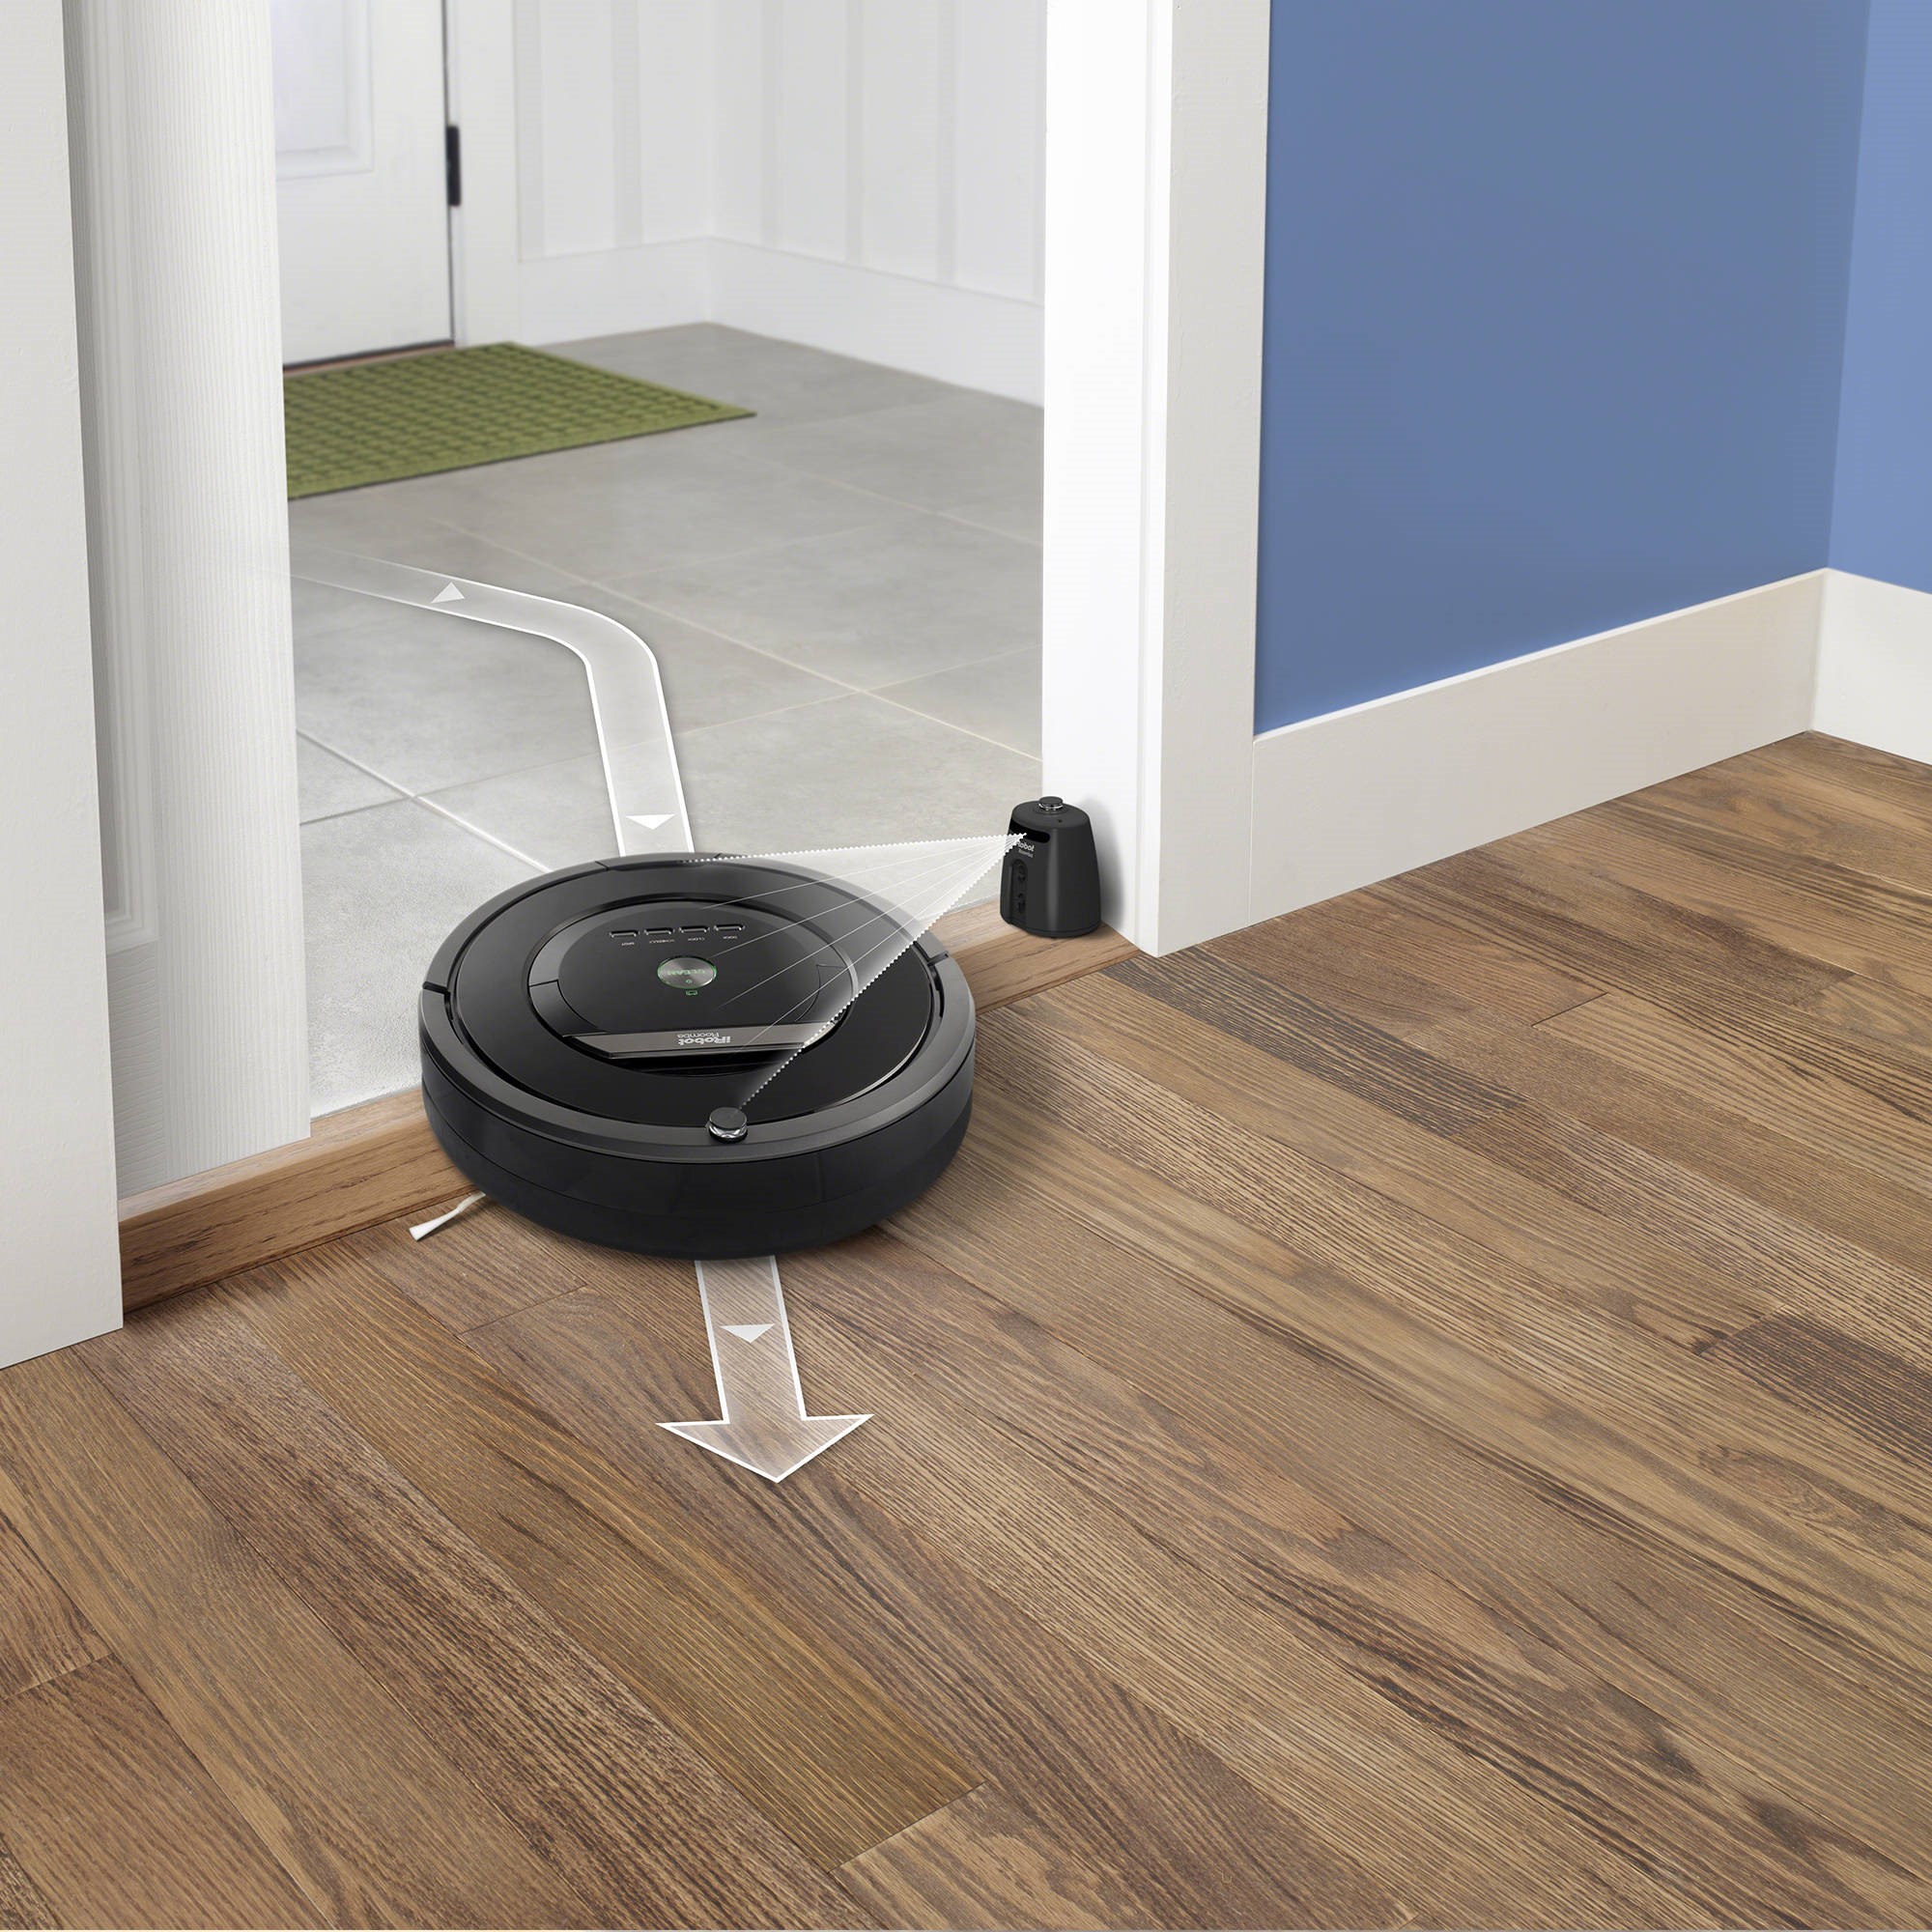 iRobot Roomba 880 Robot Vacuum with Manufacturer's Warranty - image 4 of 7